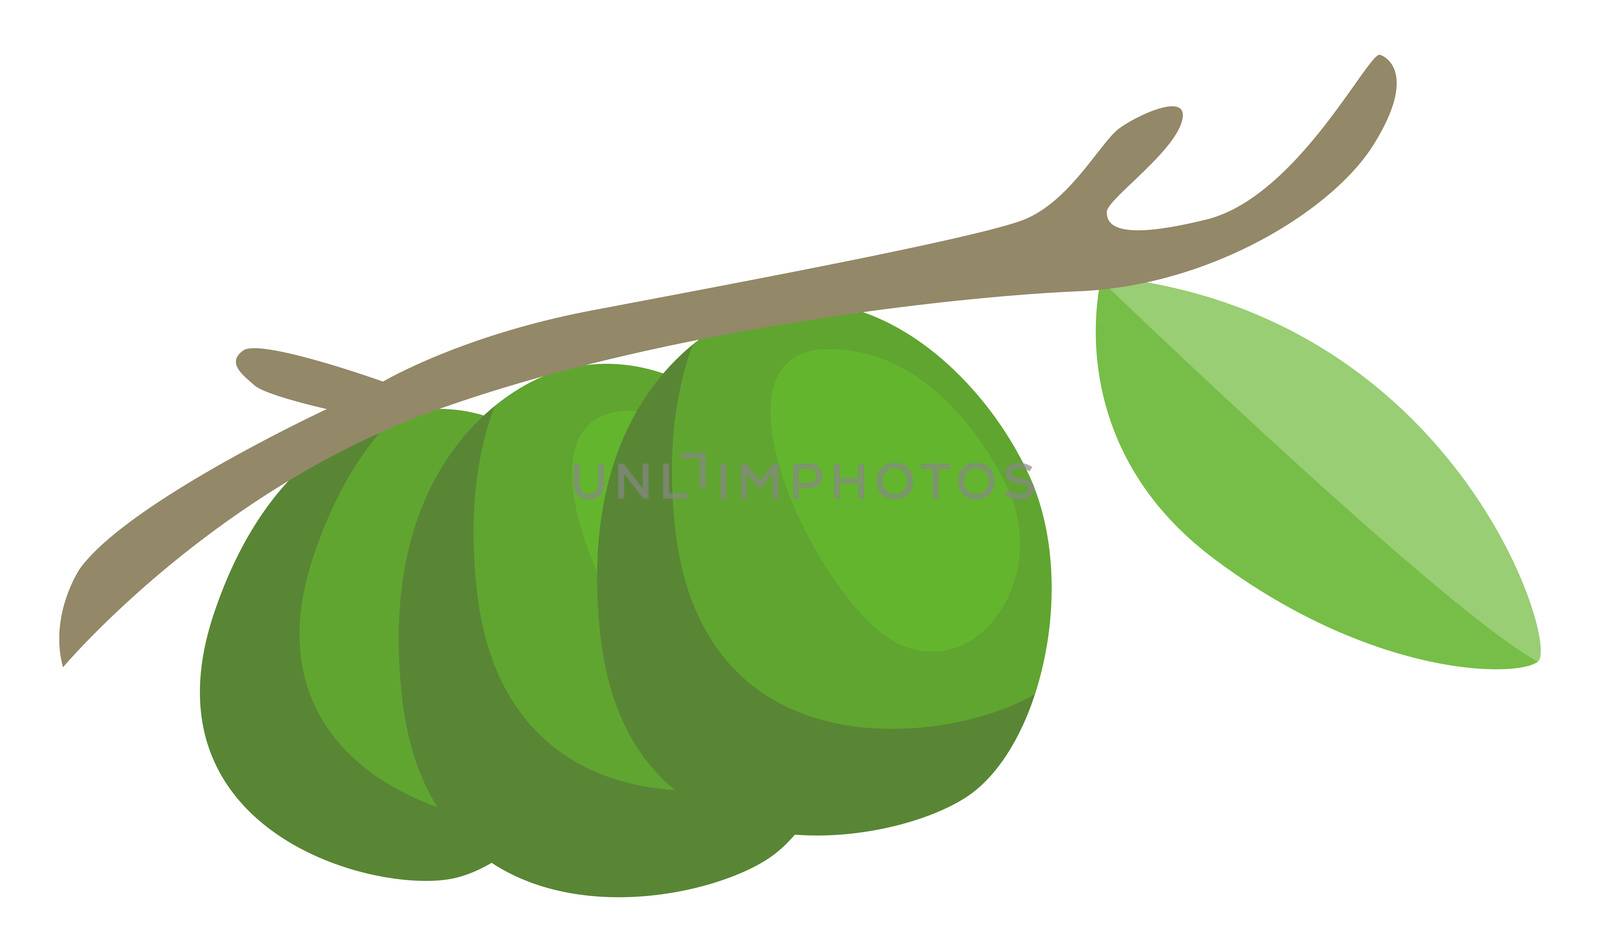 Green avocado on tree, illustration, vector on white background